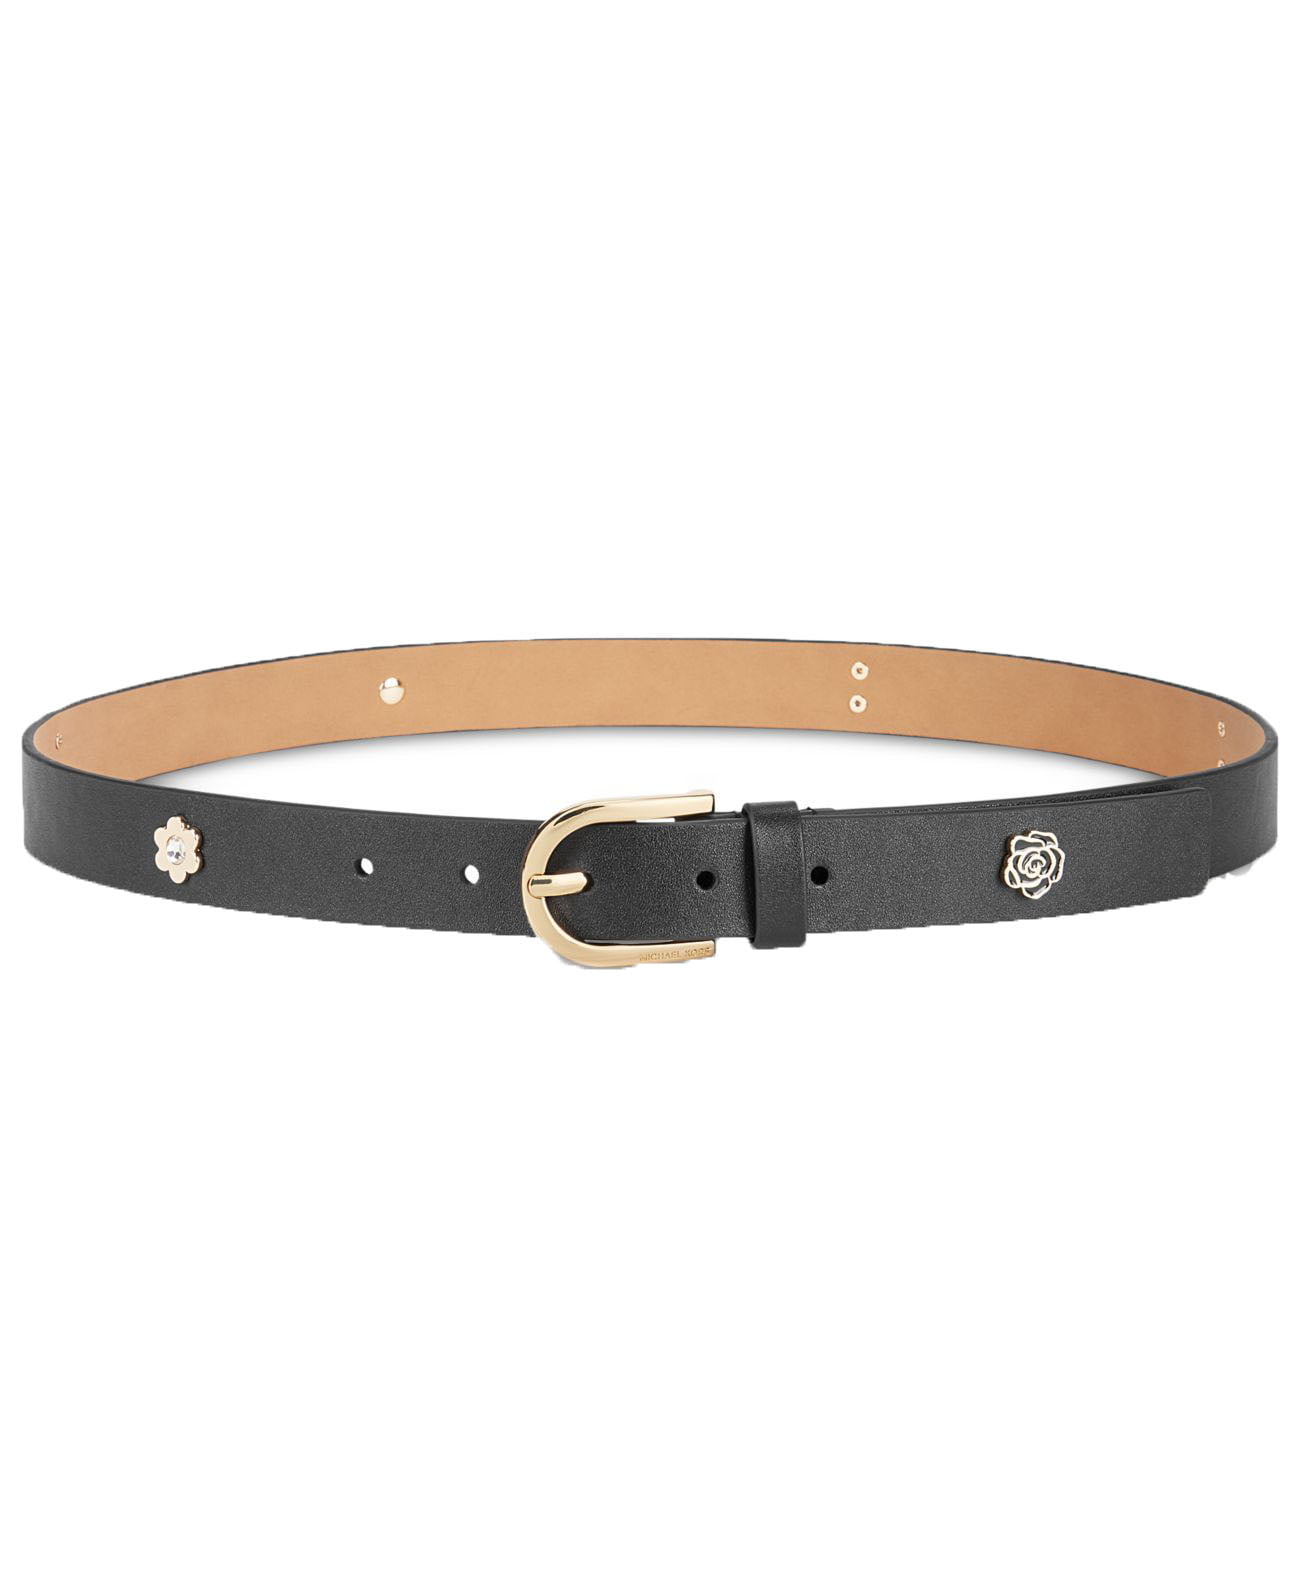 Michael Kors Leather Charm Belt (Black, M) - Walmart.com